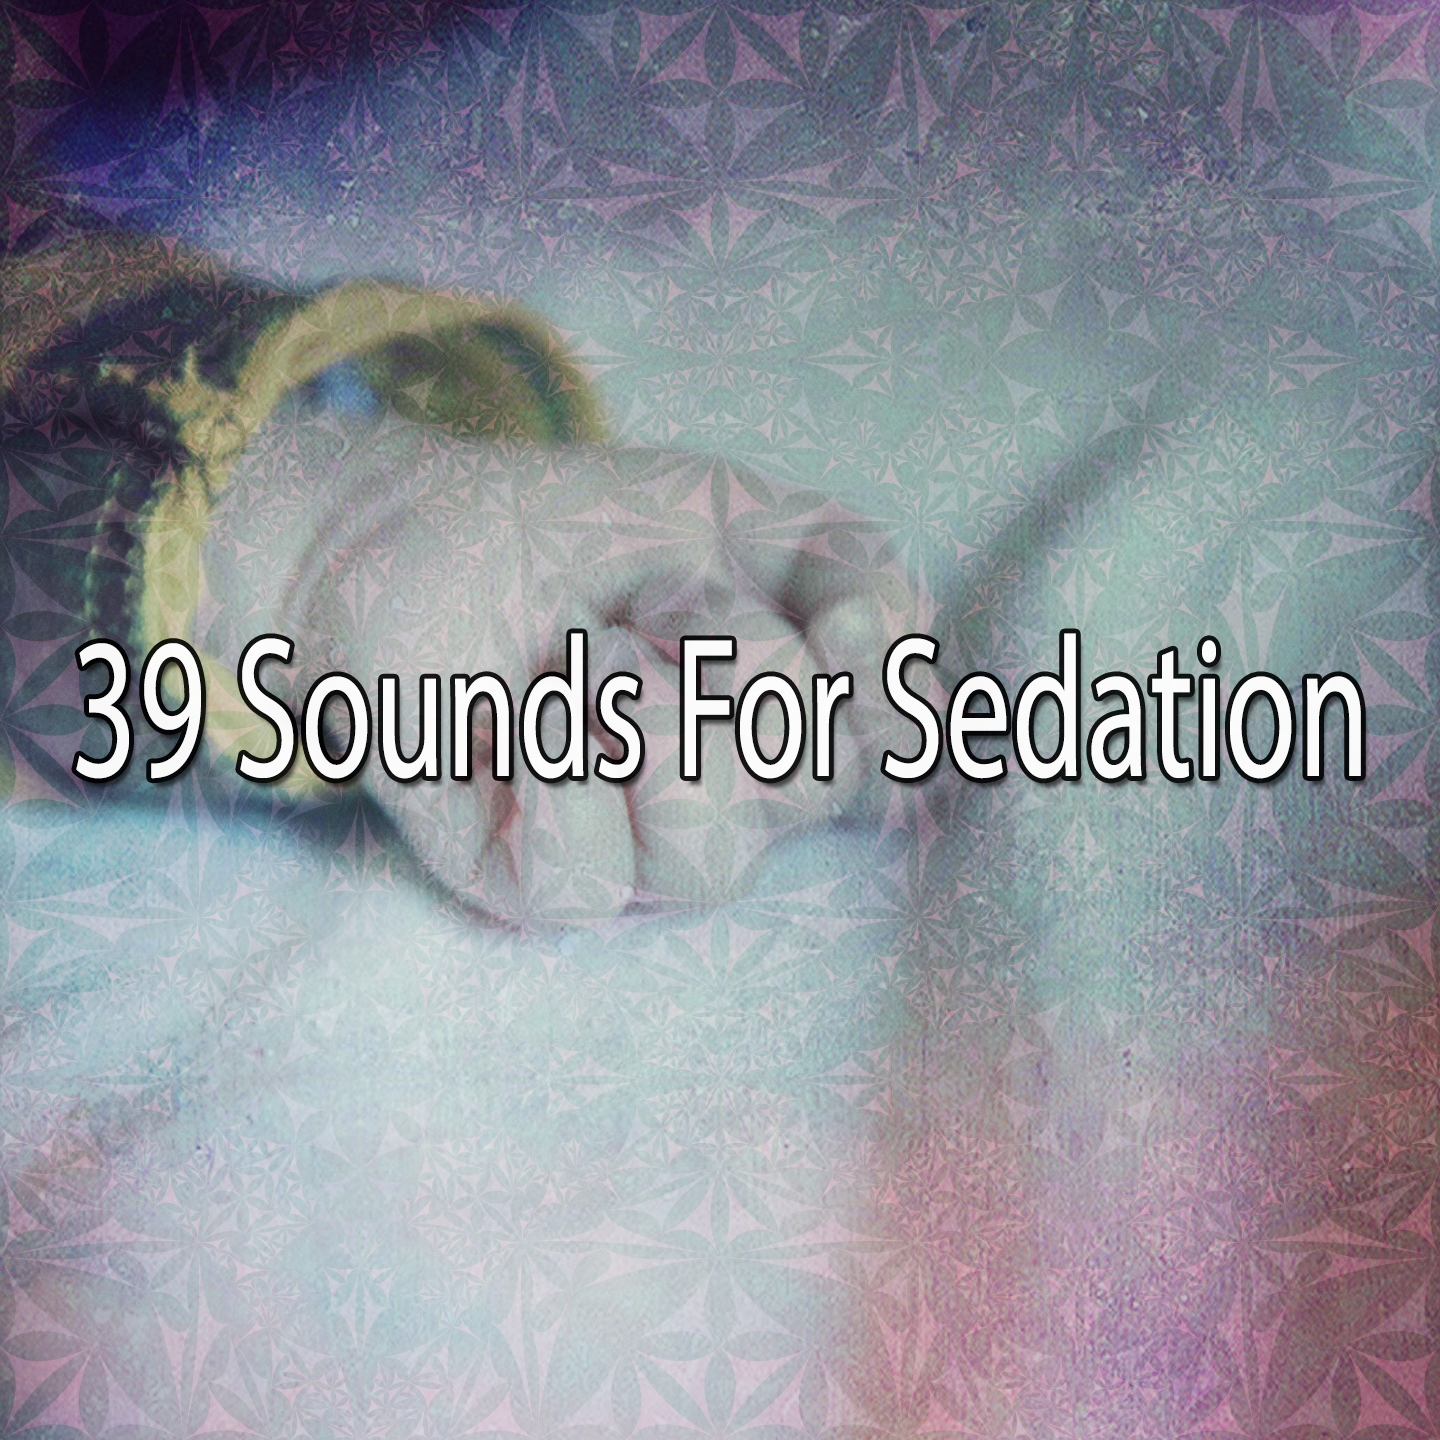 39 Sounds For Sedation